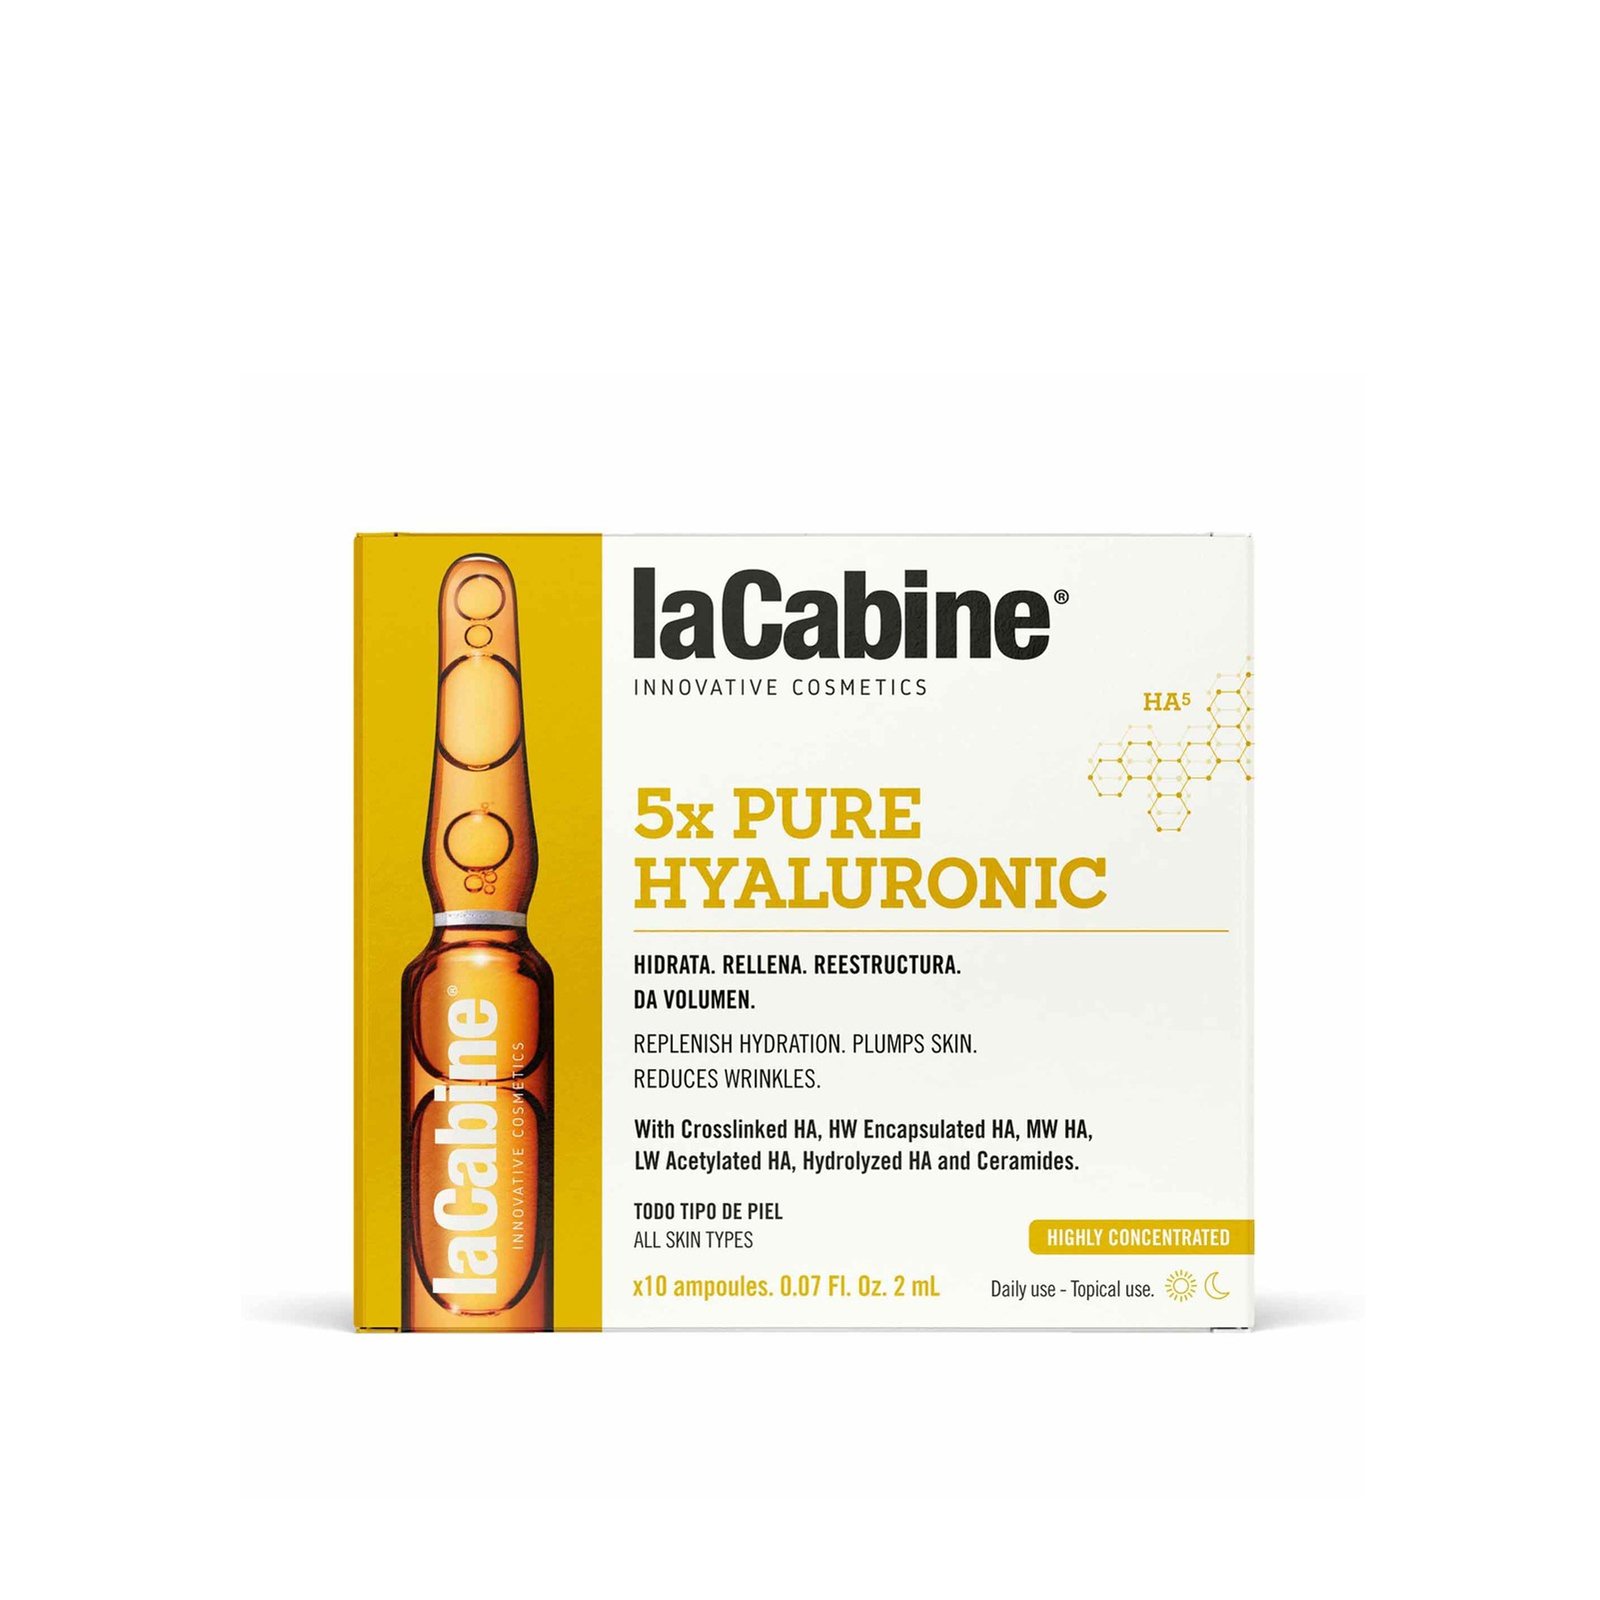 La Cabine 5x Pure Hyaluronic Concentrated Ampoules 10x2ml (10x0.07 fl oz)